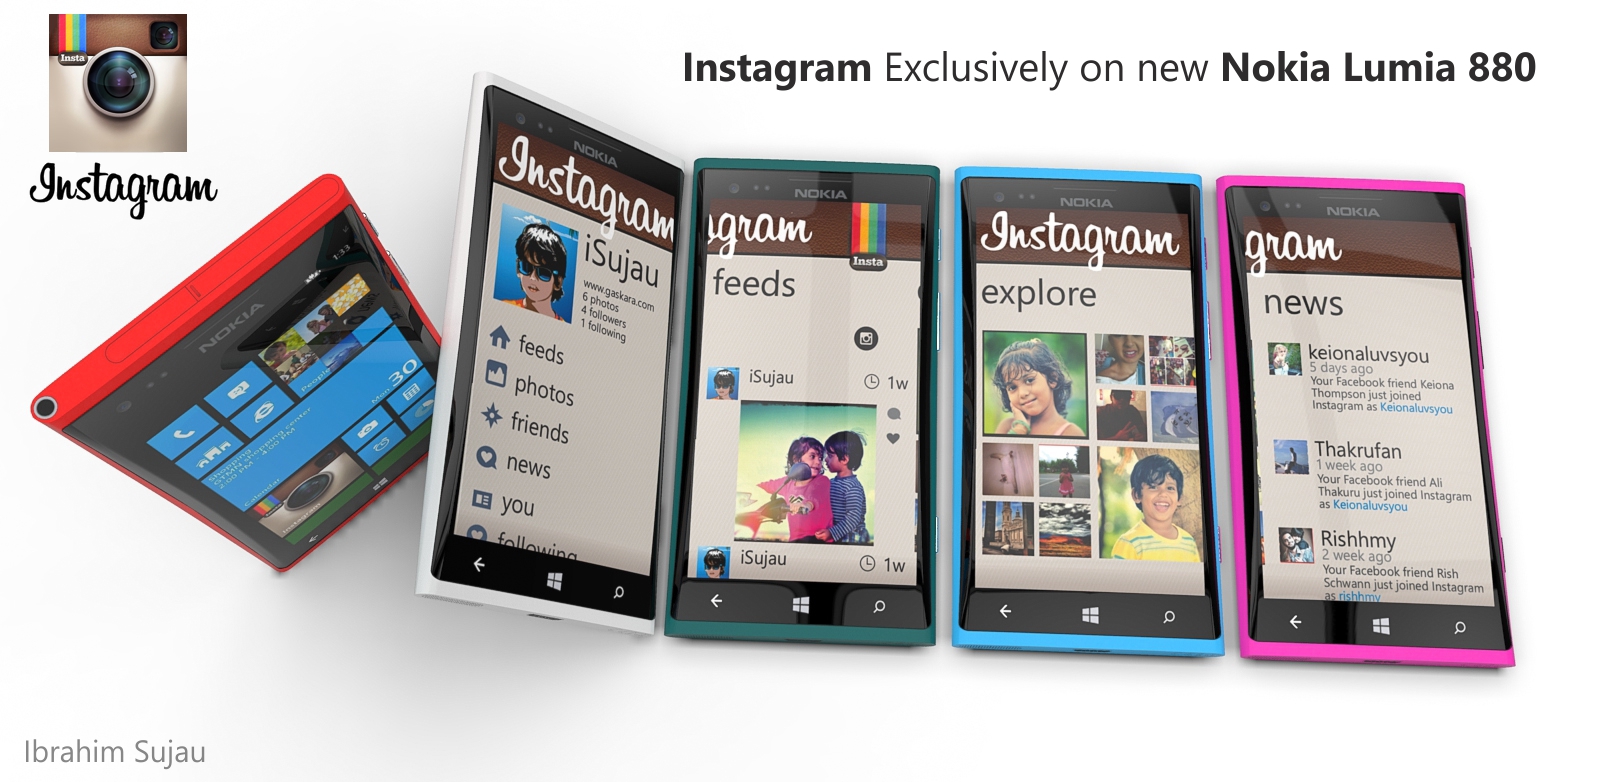 Instagram Video Downloader For Windows Phone